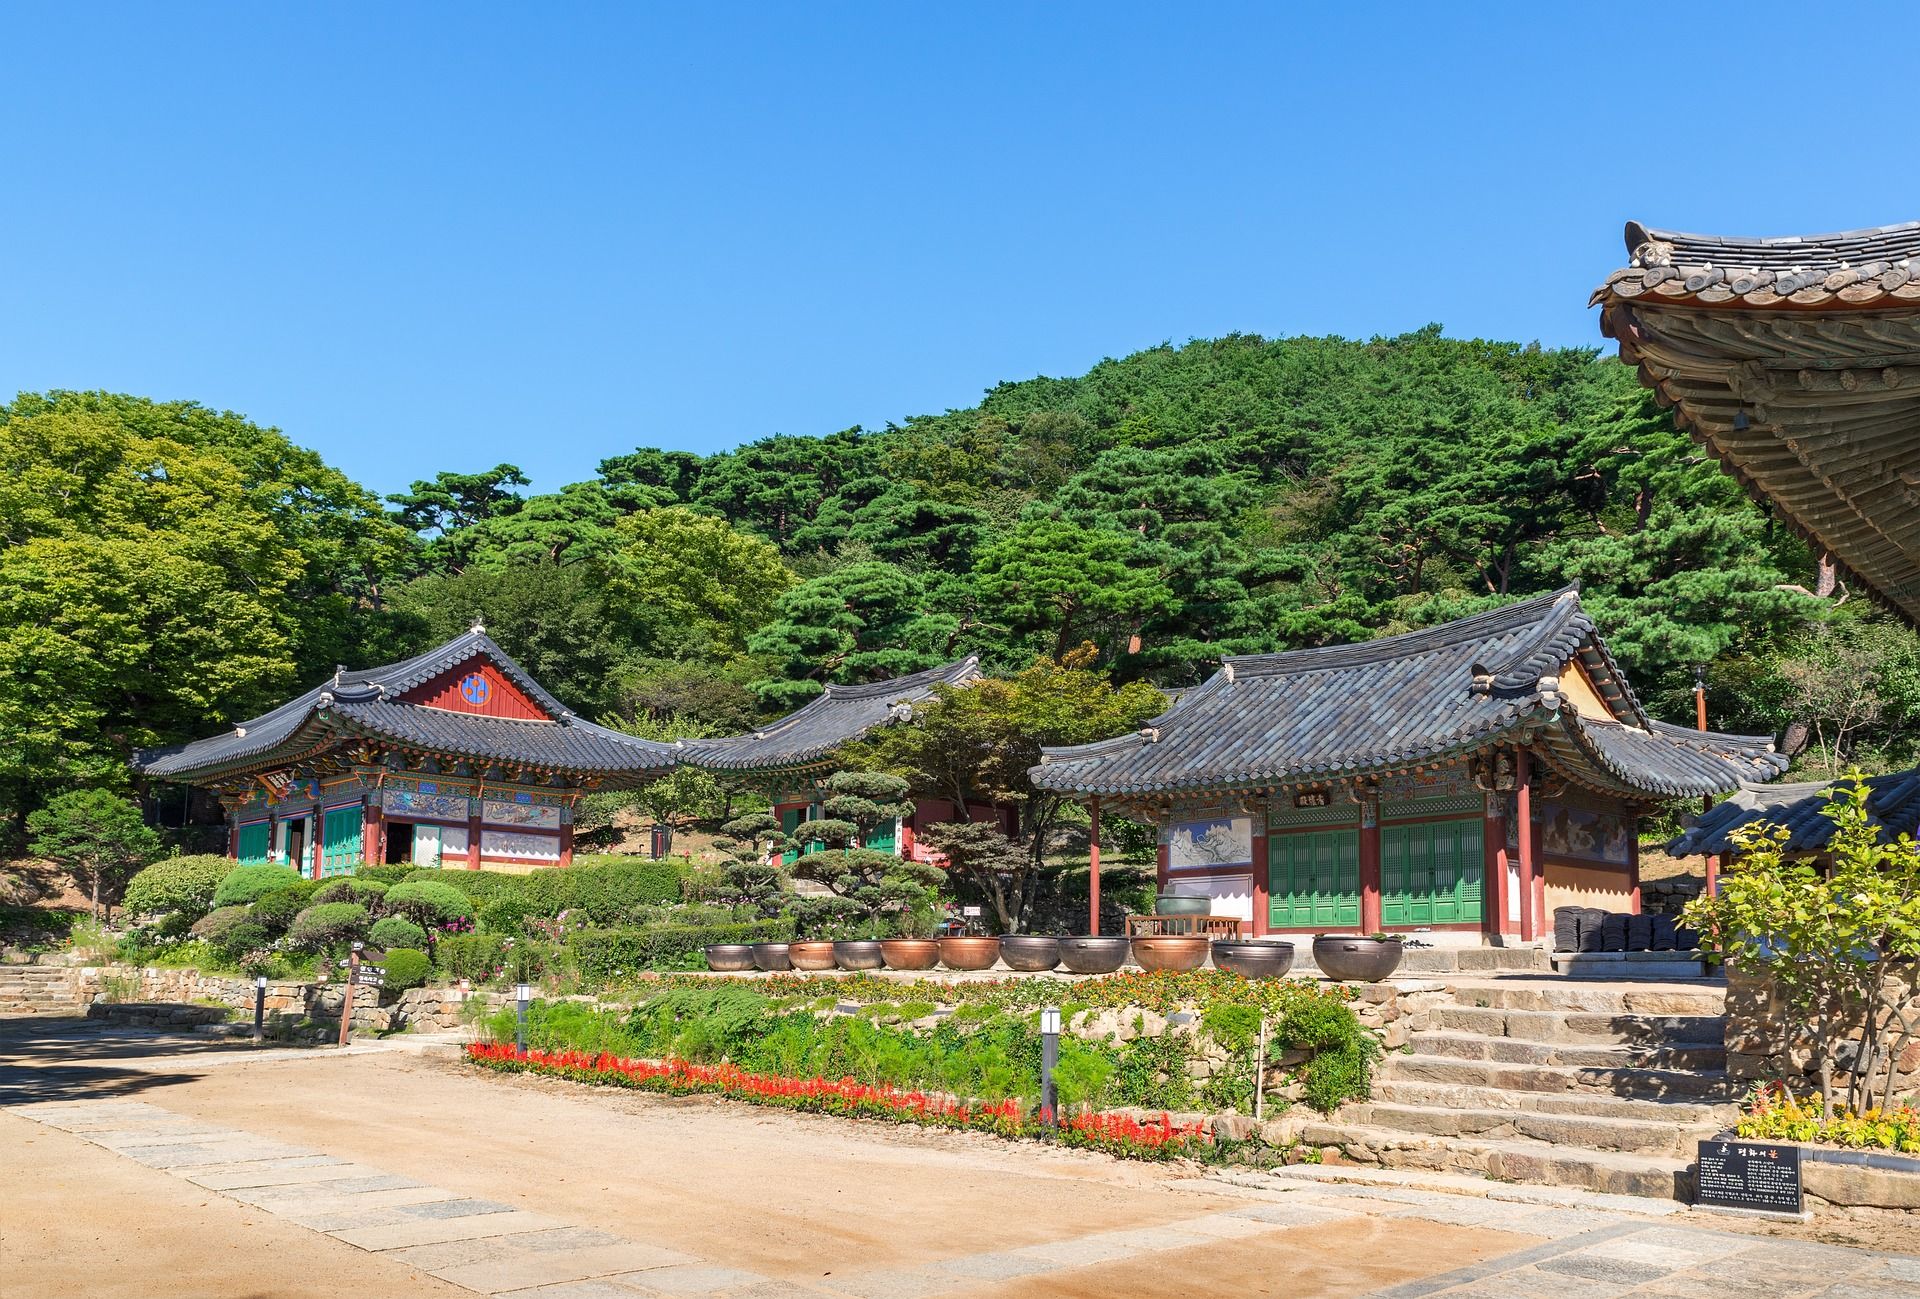 Historic buildings in Ganghwado, South Korea